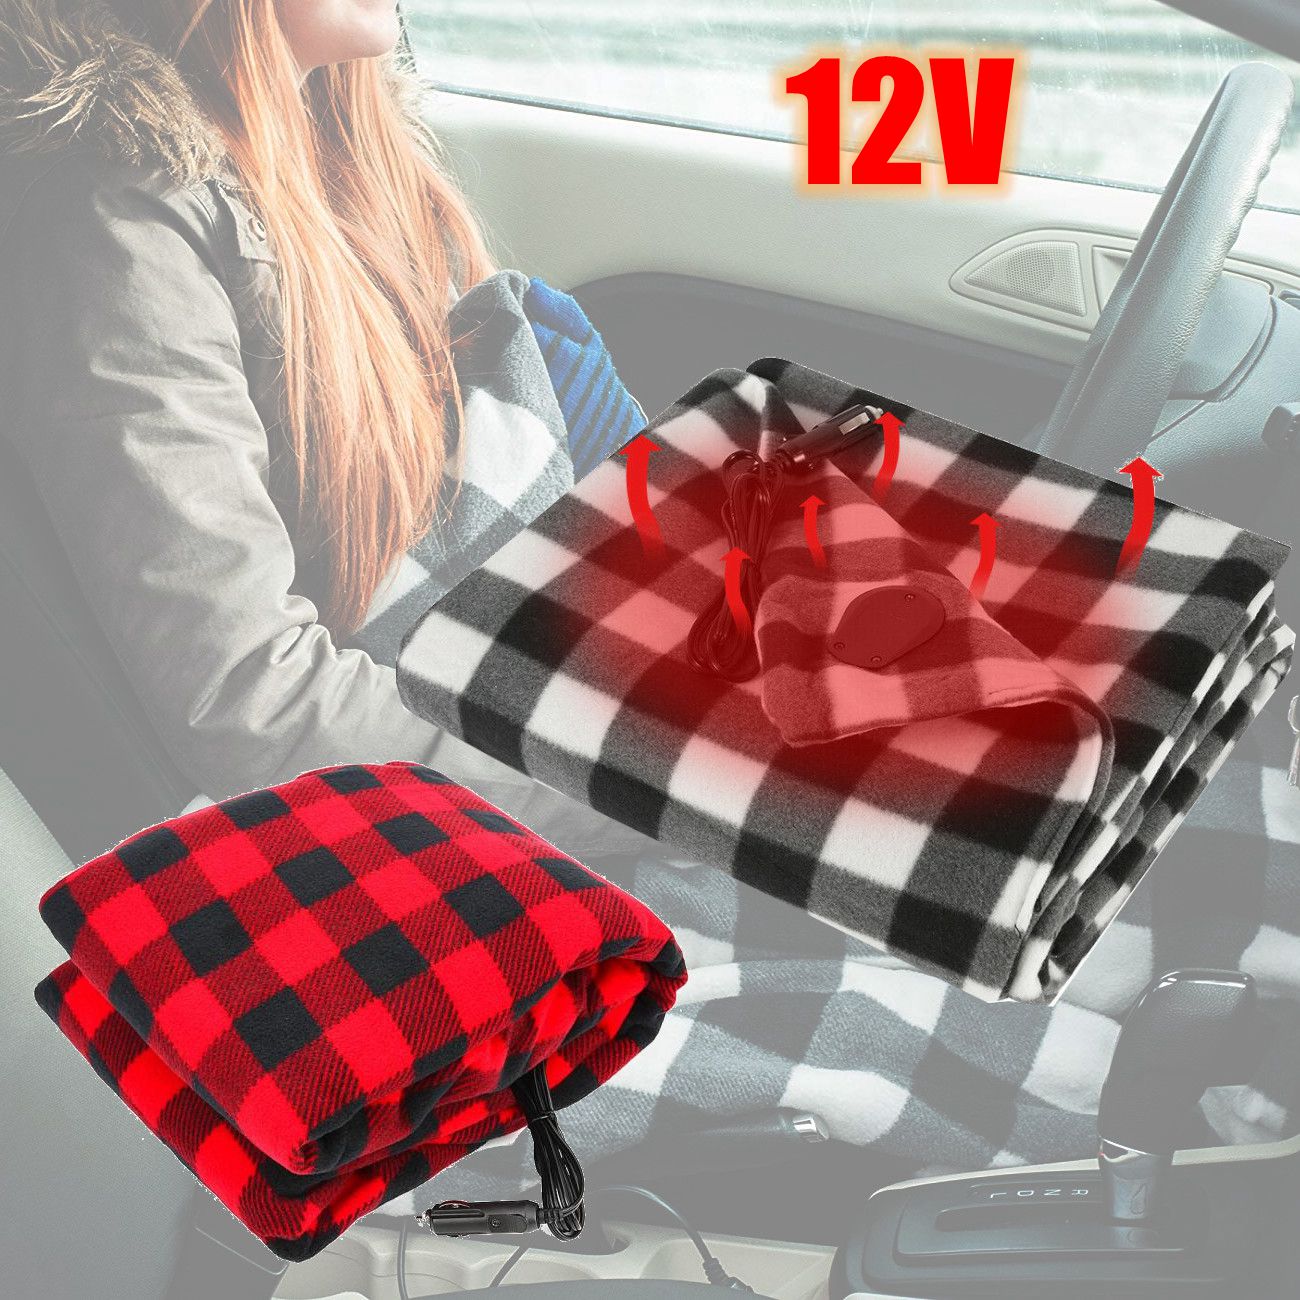 12V Heated Electric Fleece Black Red Checkered Blanket Car Truck SUV Van Warmer